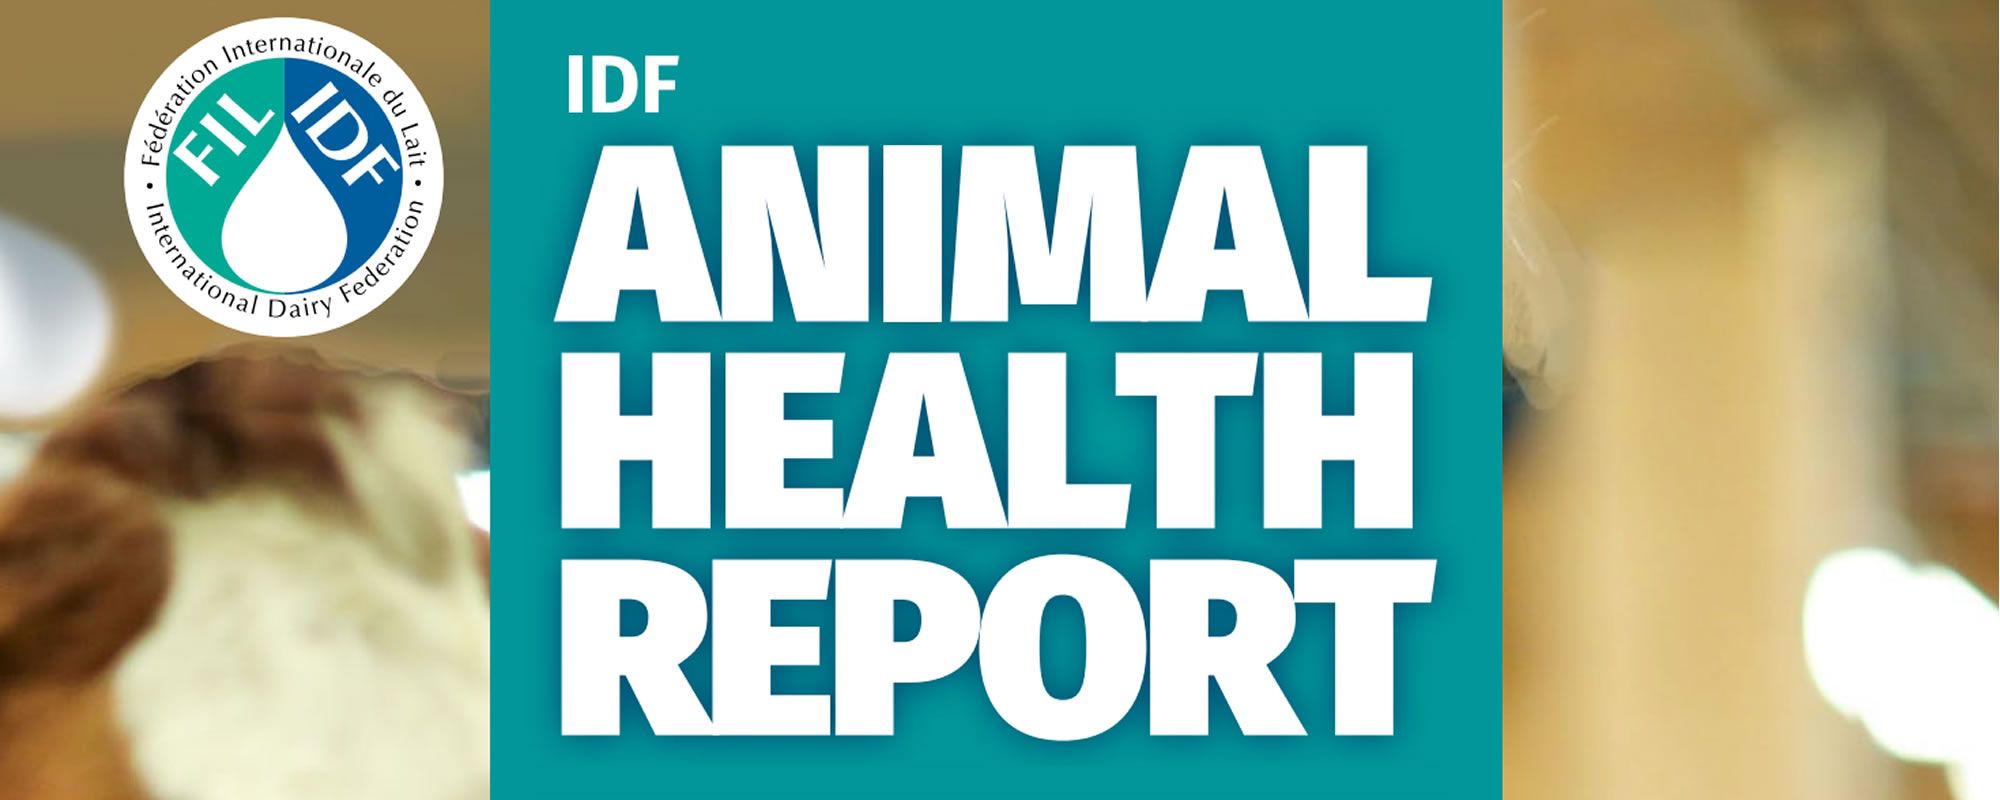 IDF publishes International Animal Health Report 2020